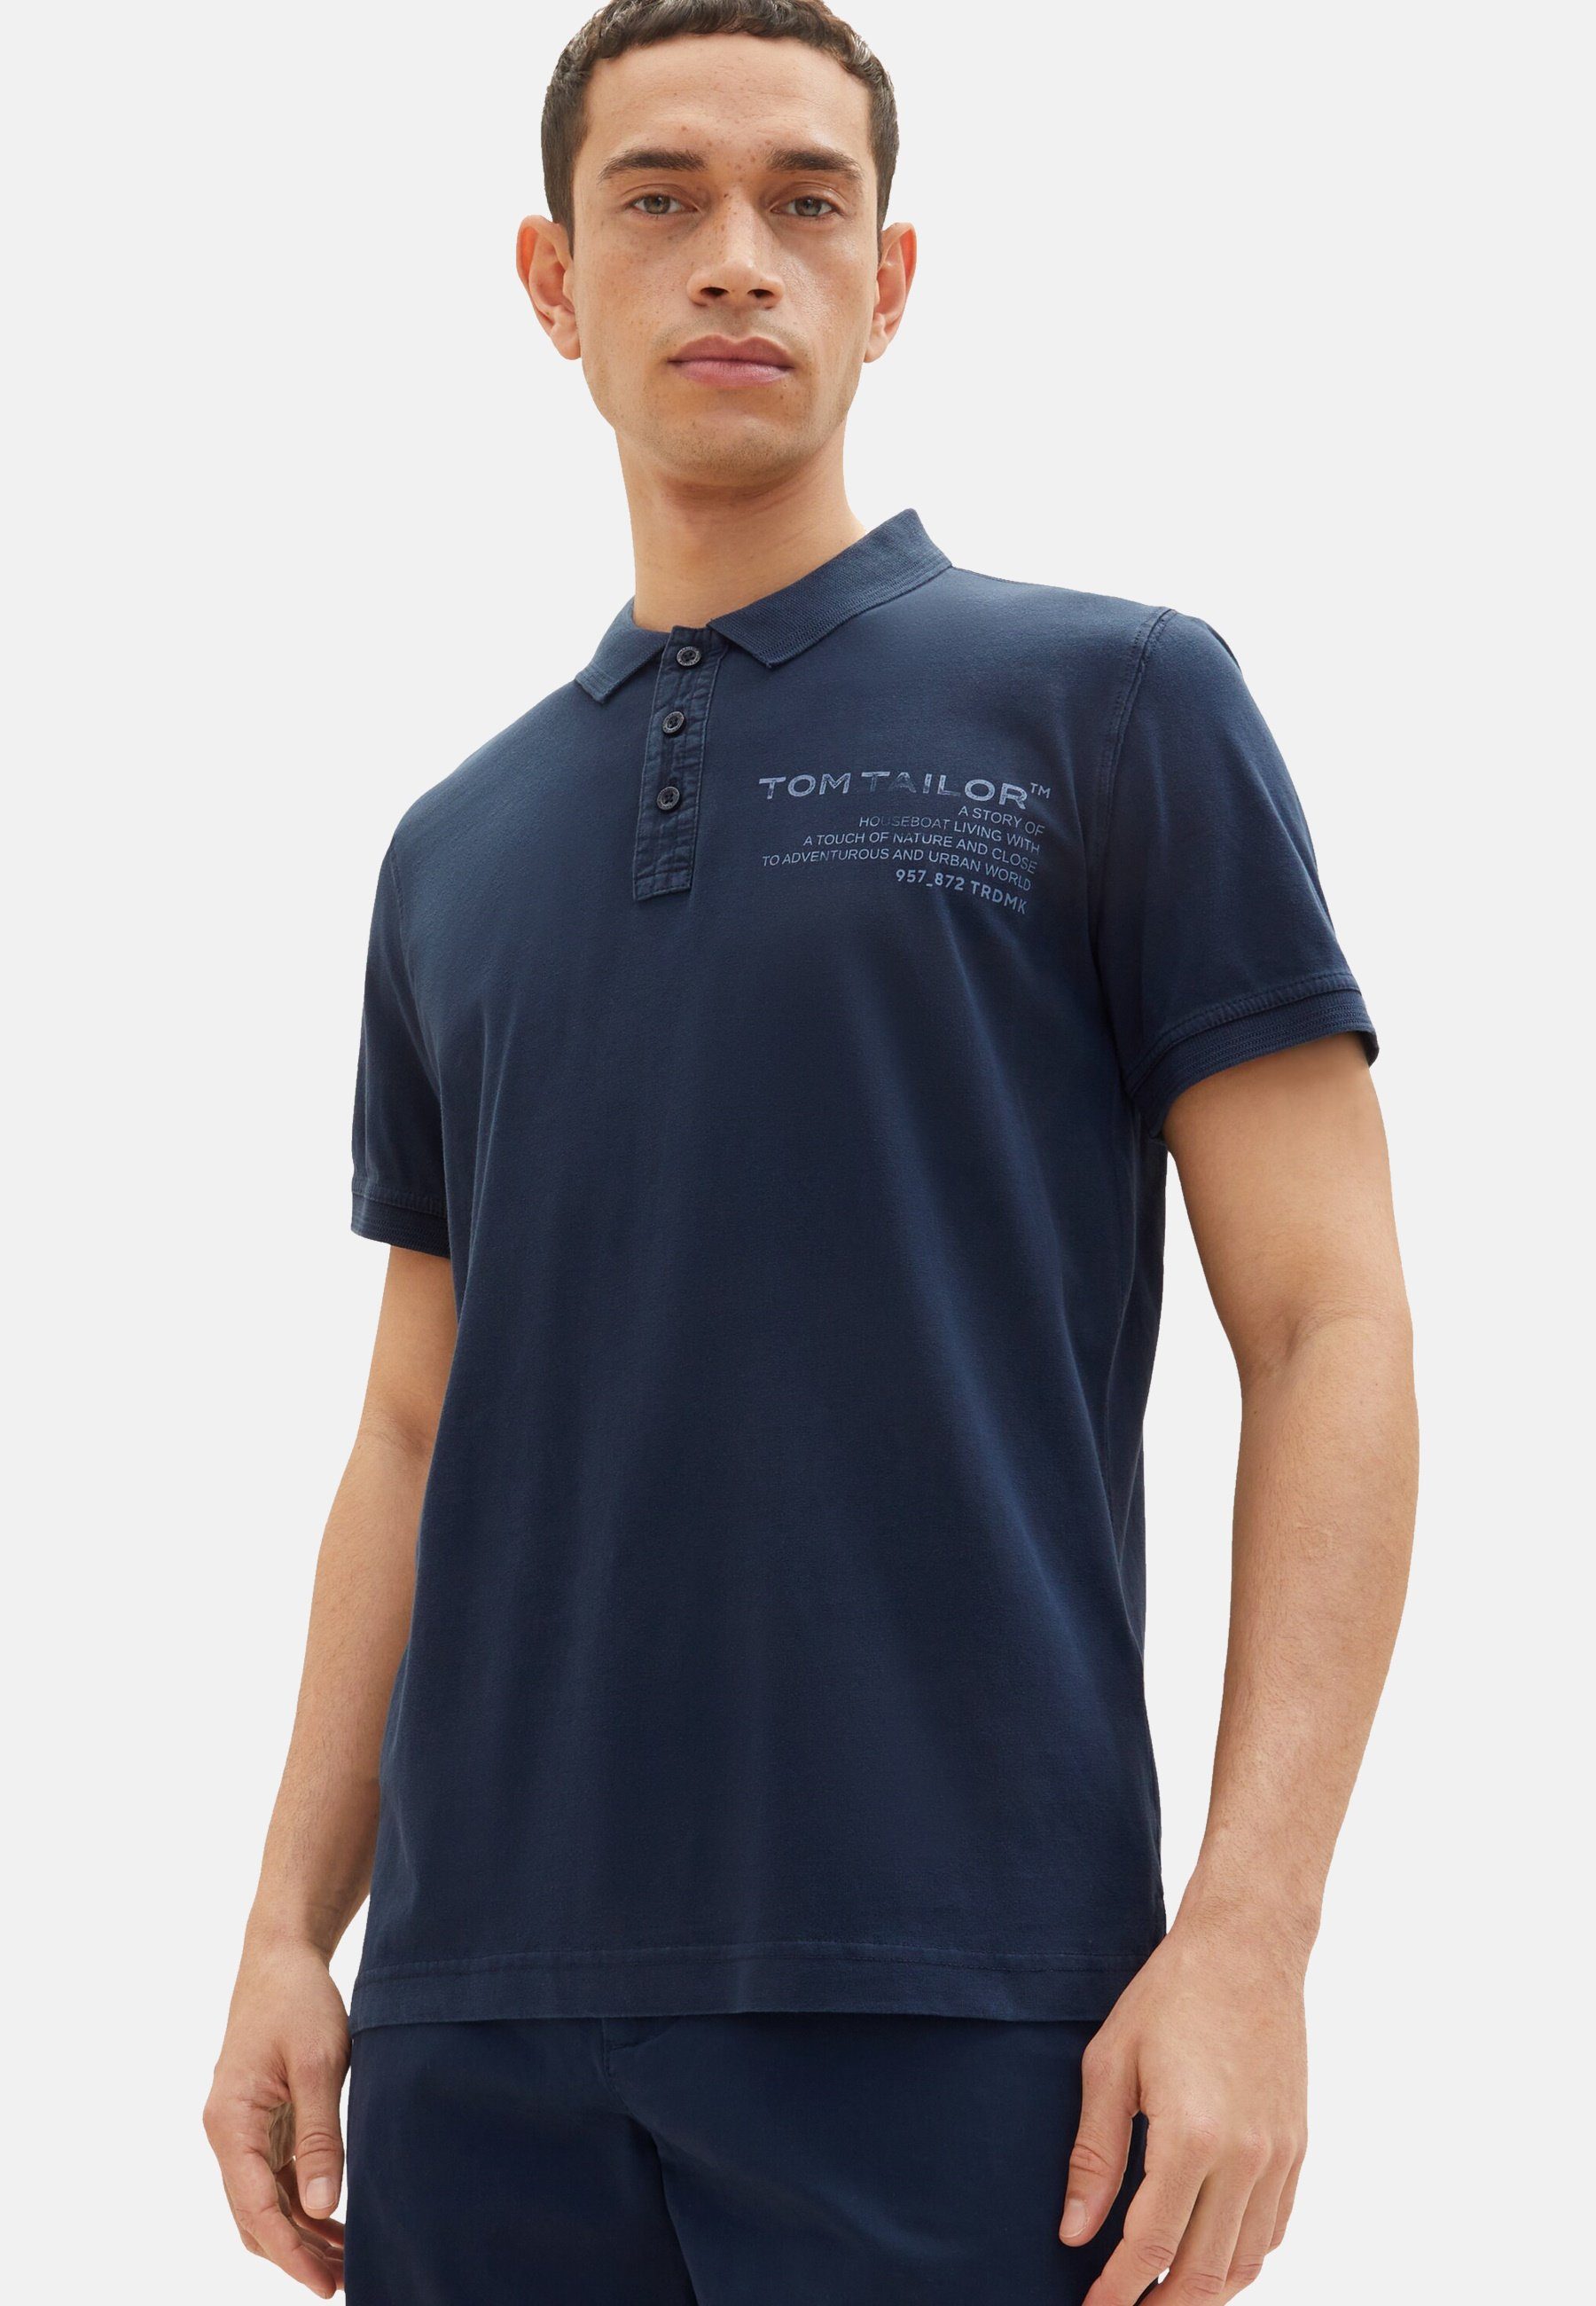 Polokragen TAILOR Kurzarmshirt und Poloshirt (1-tlg) dunkelblau TOM Poloshirt mit